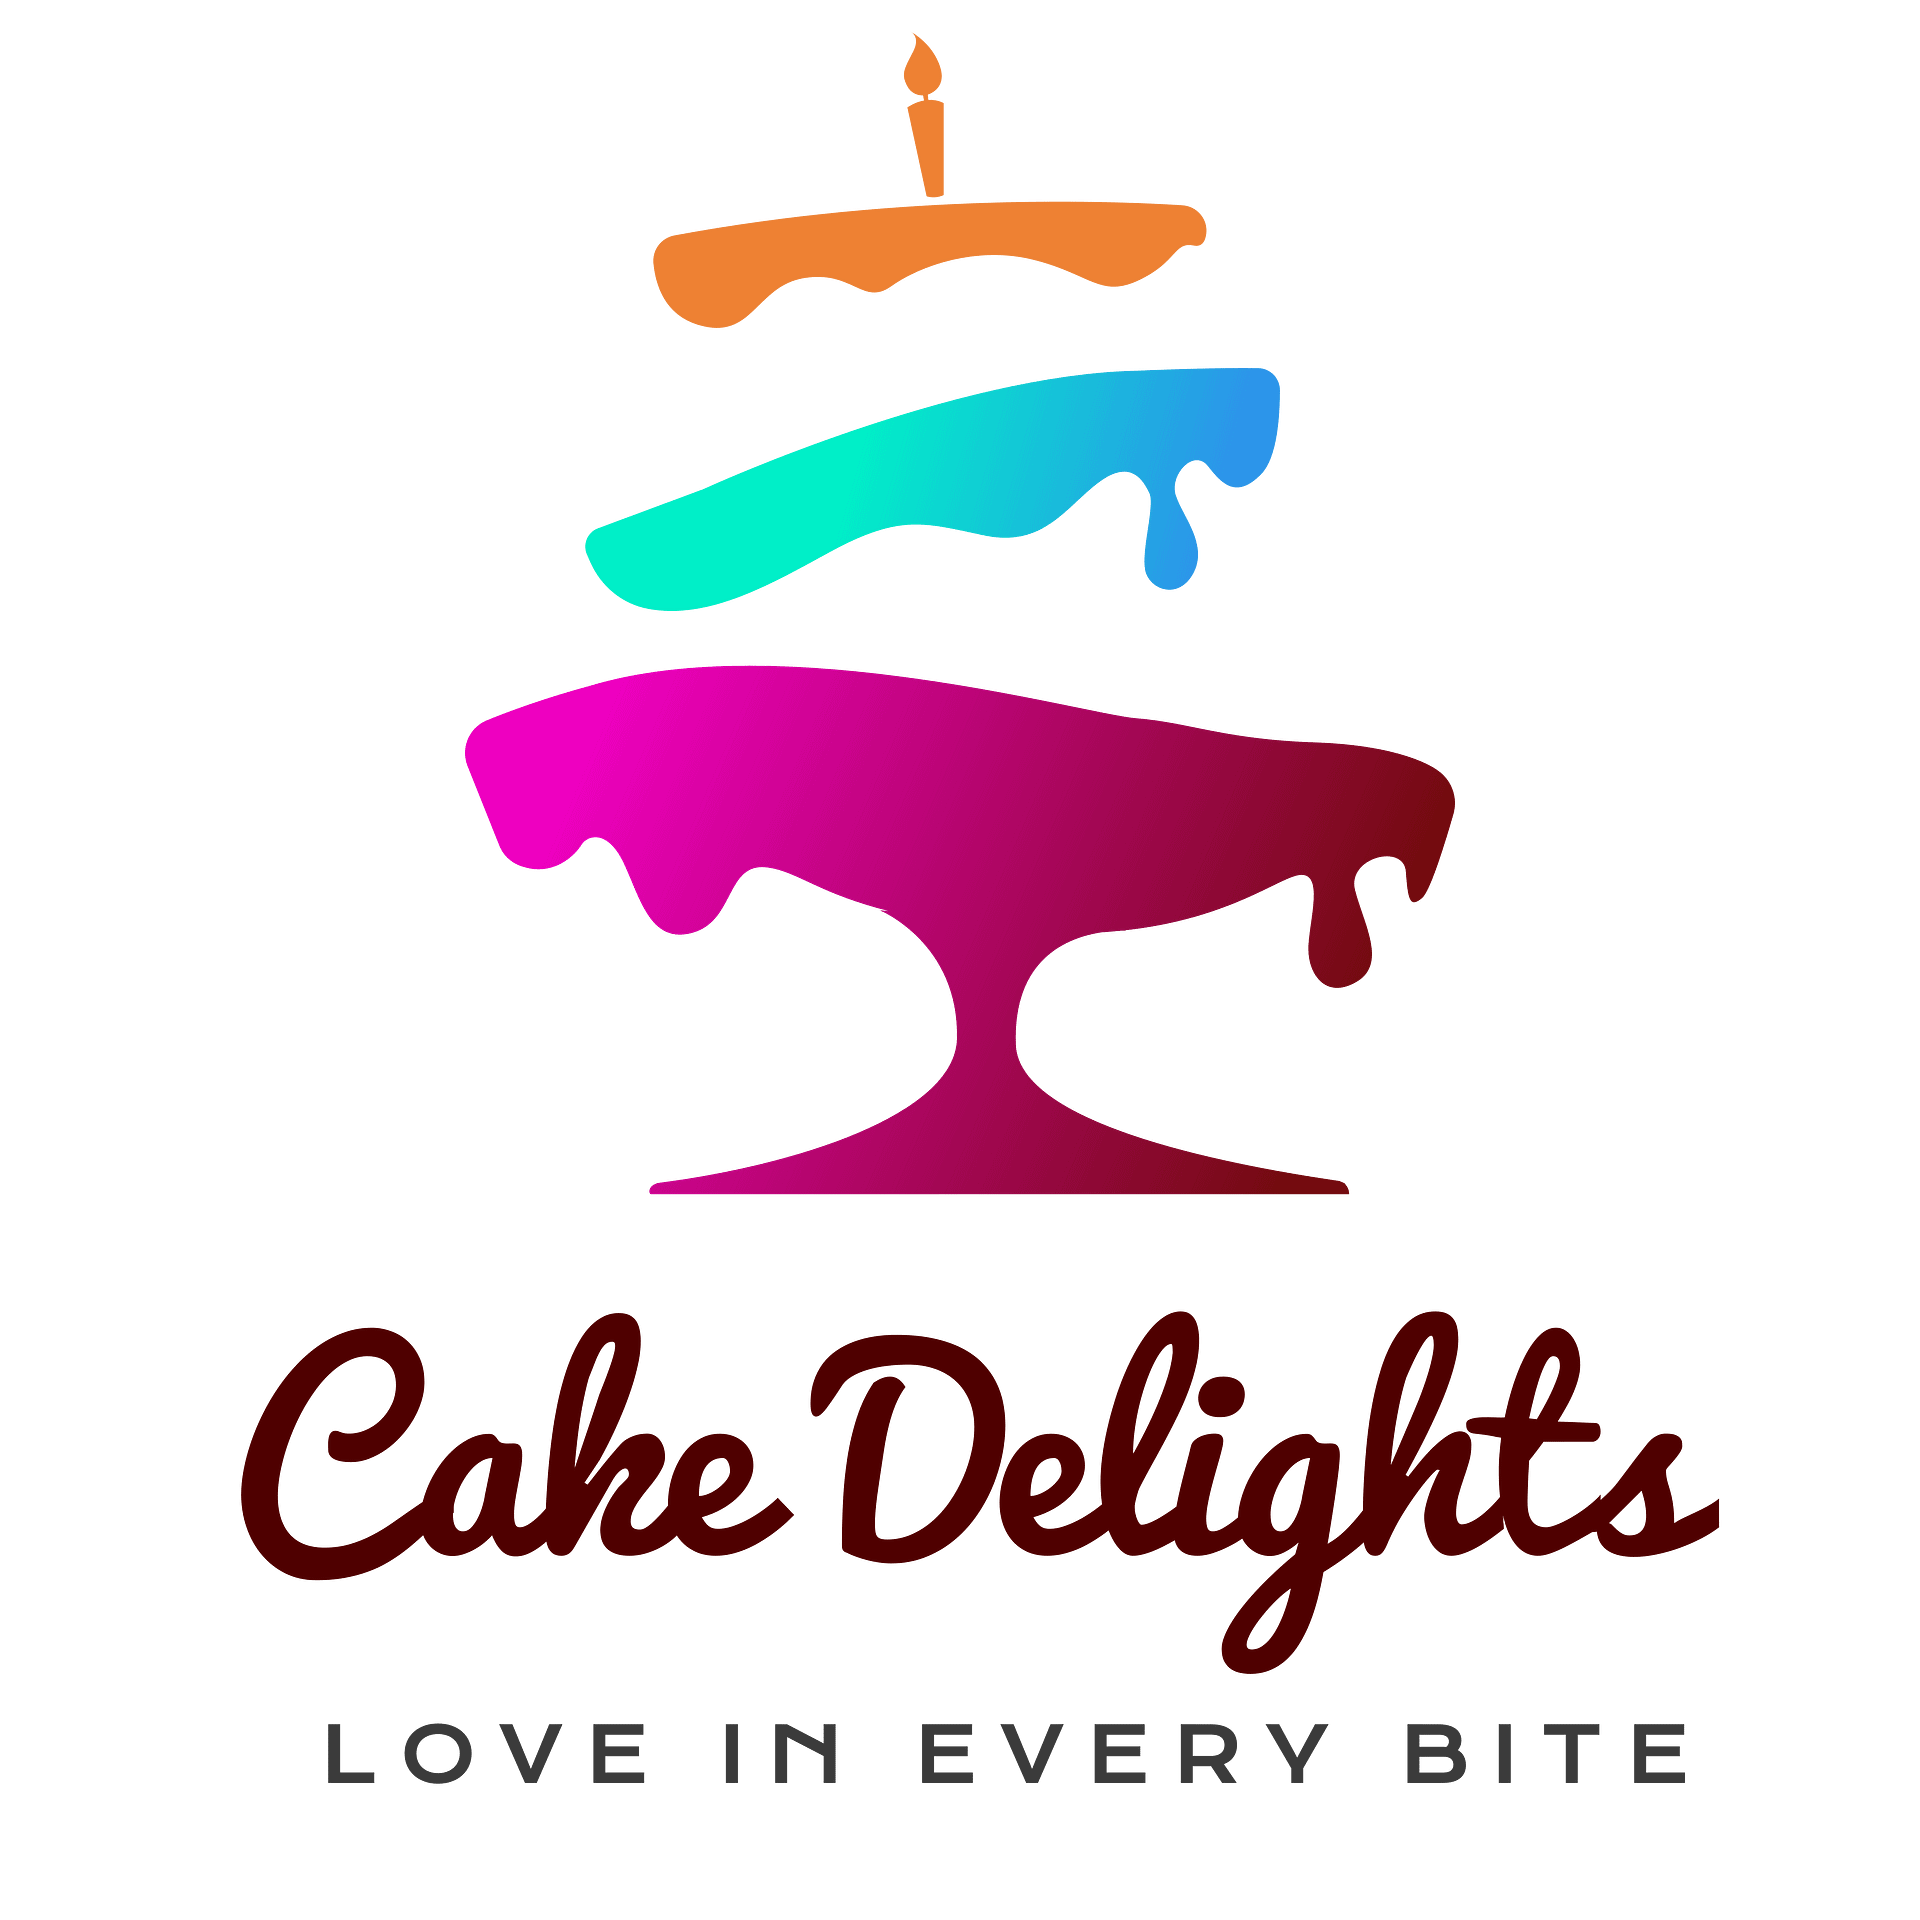 Chocolate Delight Cake  Cake Square Chennai  Cake Shop in Chennai